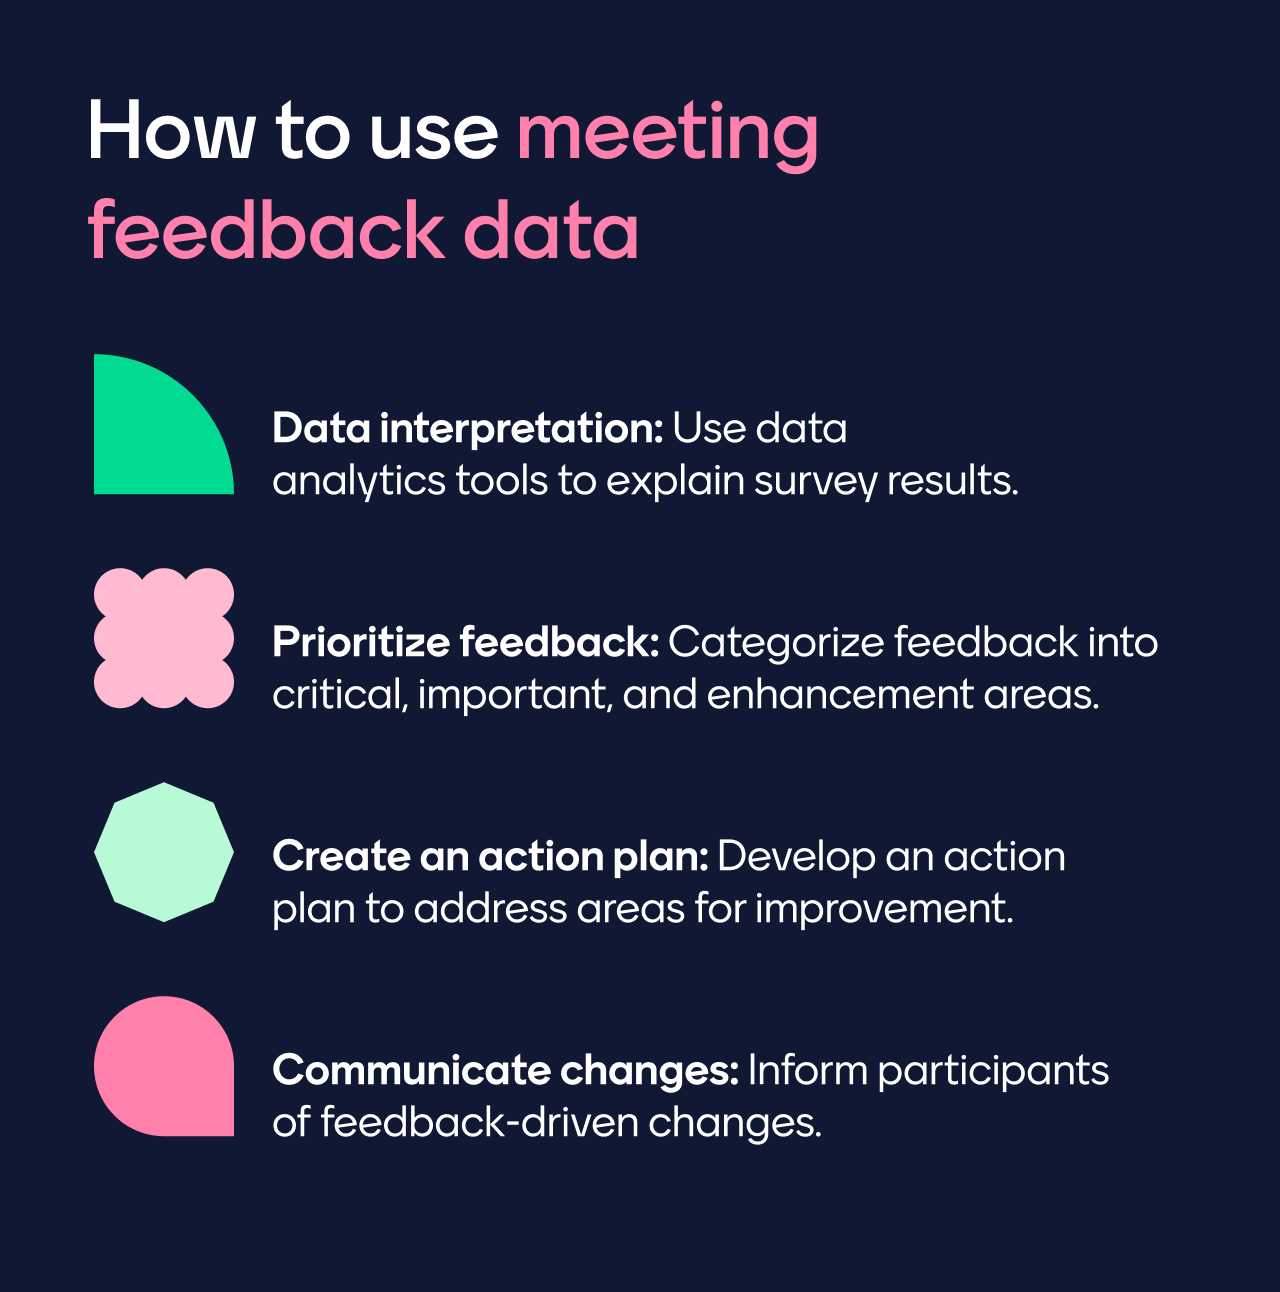 Four ways to use meeting feedback data